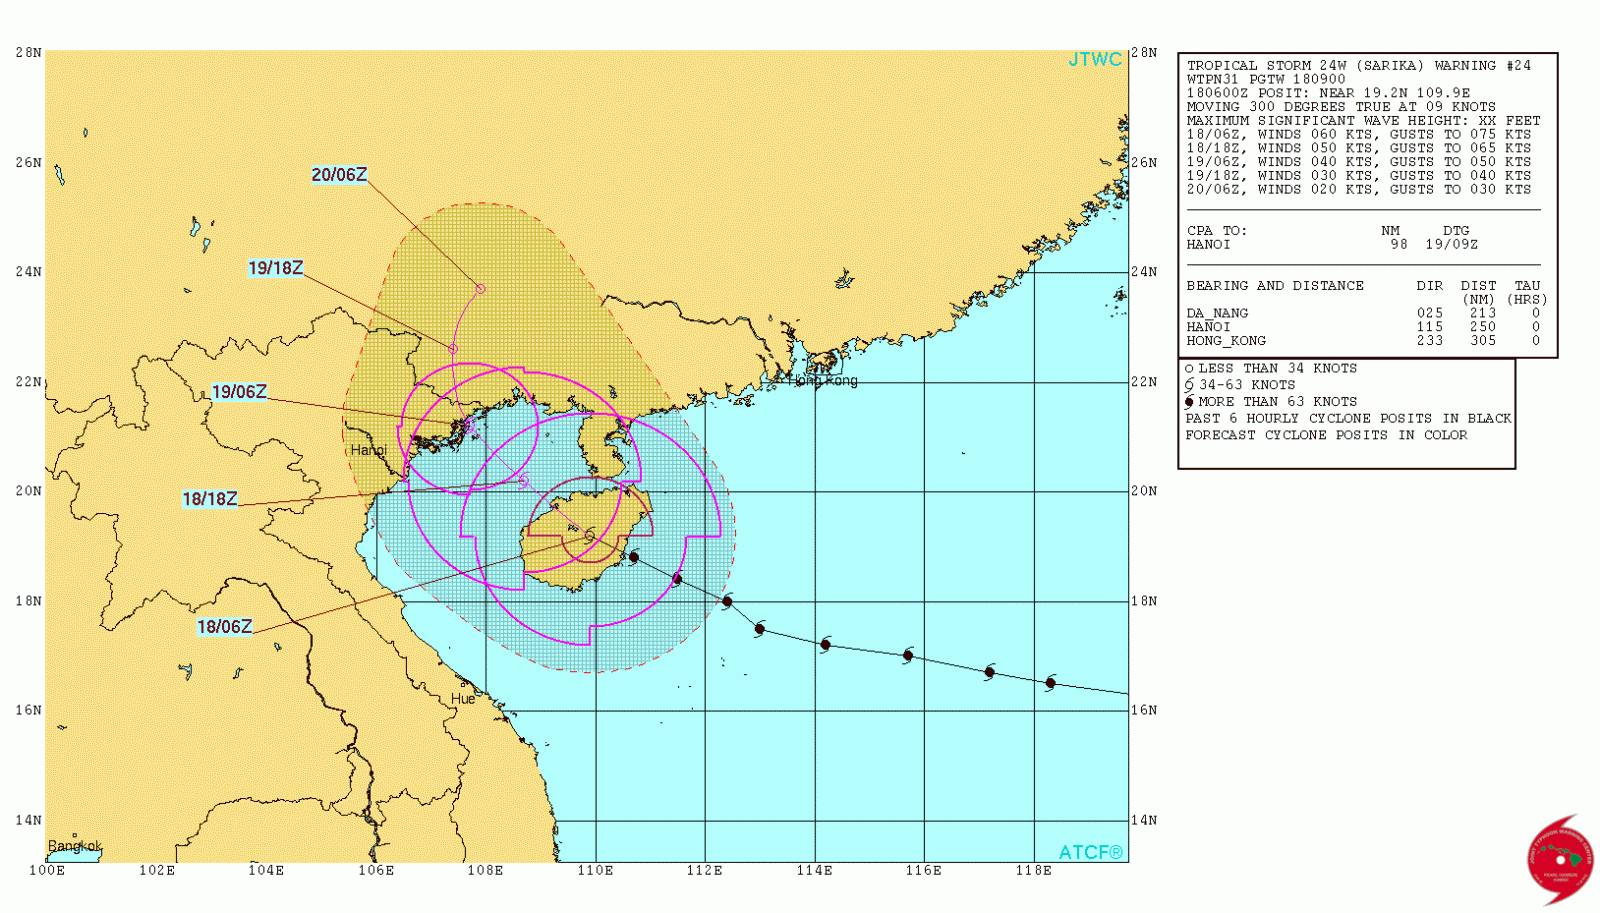 Typhoon Sarika forecast track by JTWC at 09:00 UTC on October 18, 2016